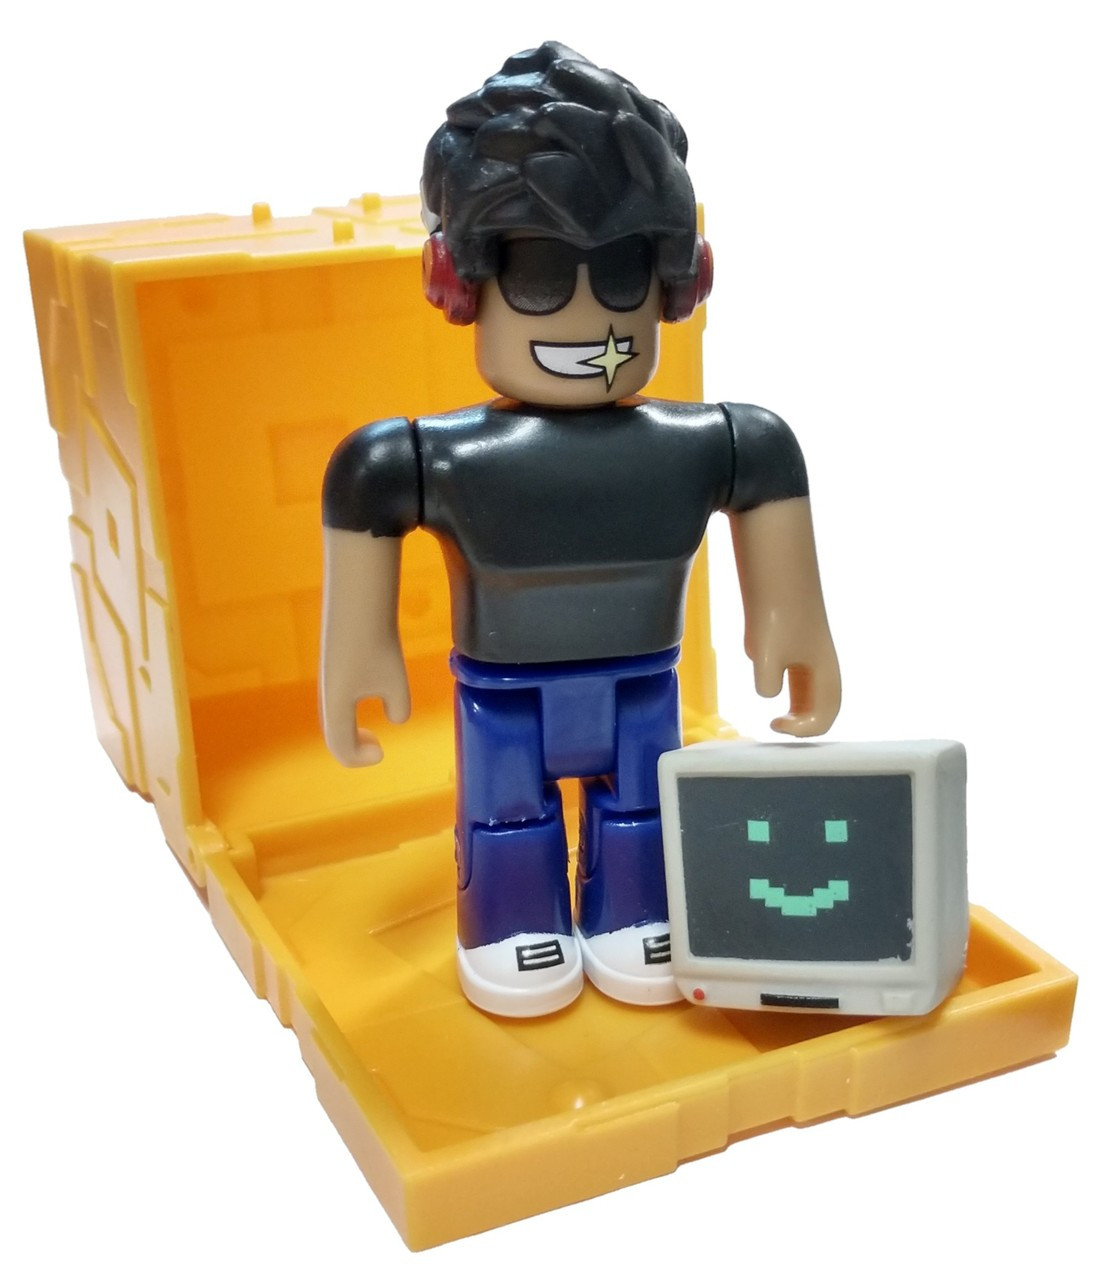 Roblox Series 5 Simbuilder 3 Mini Figure With Gold Cube And Online Code Loose Jazwares Toywiz - roblox gundam song